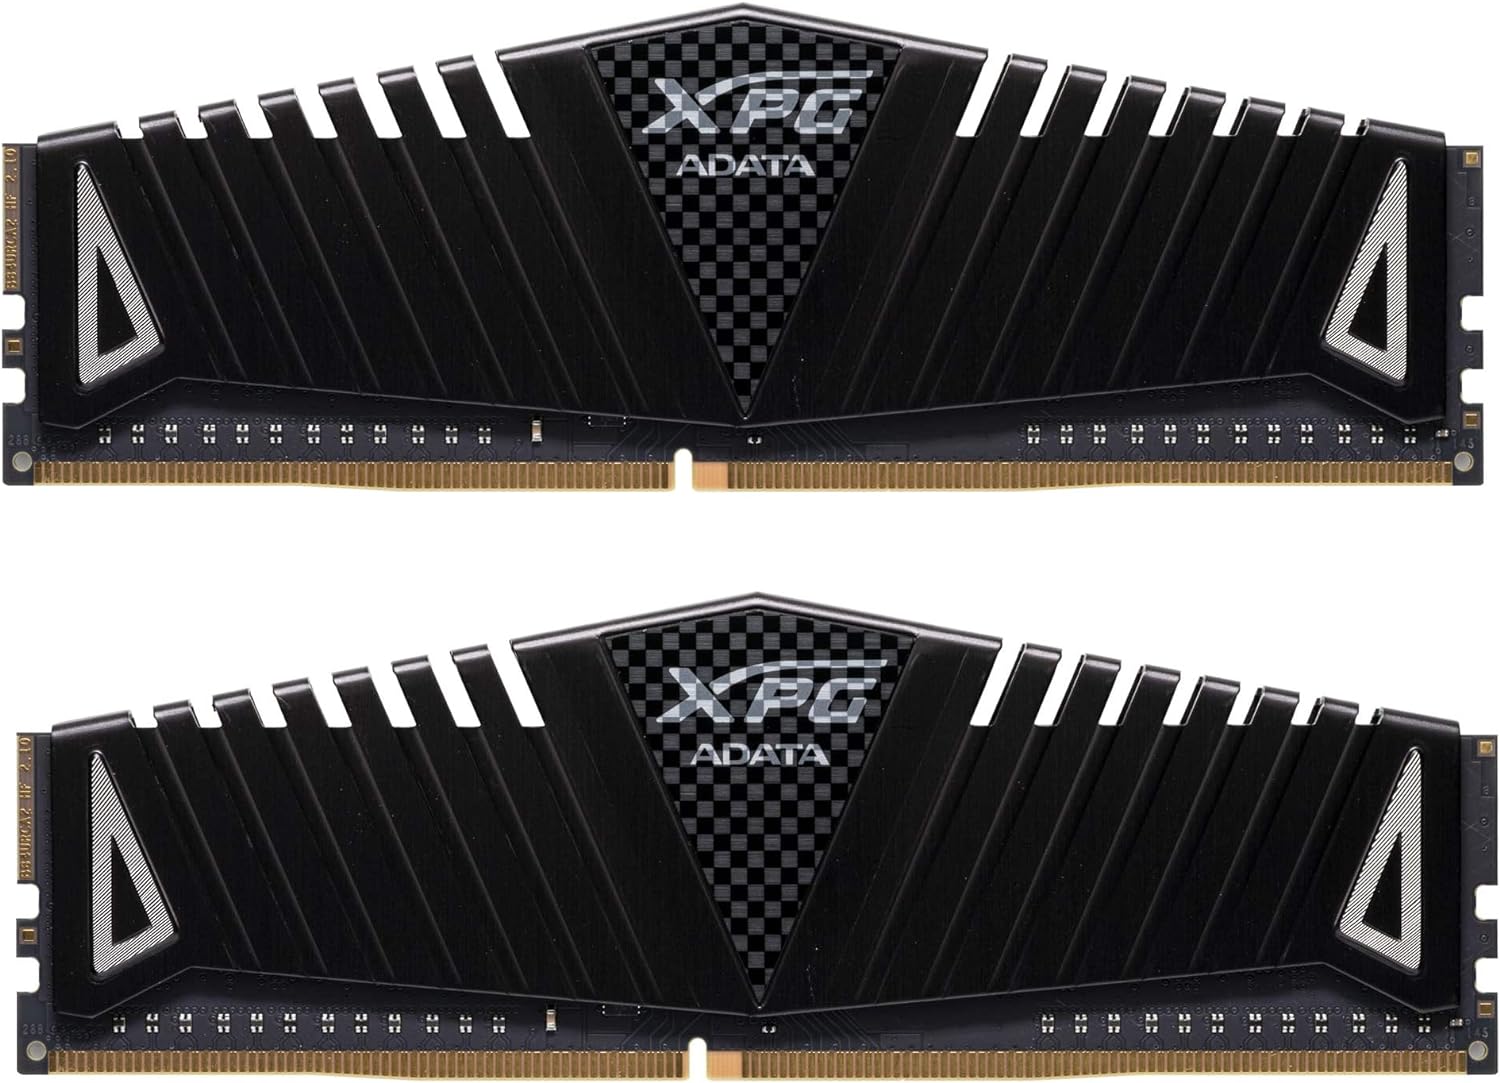 XPG Z1 DDR4 3000MHz (PC4 24000) 16GB (2x8GB) 288-Pin Memory Modules, Black (AX4U300038G16A-DBZ)